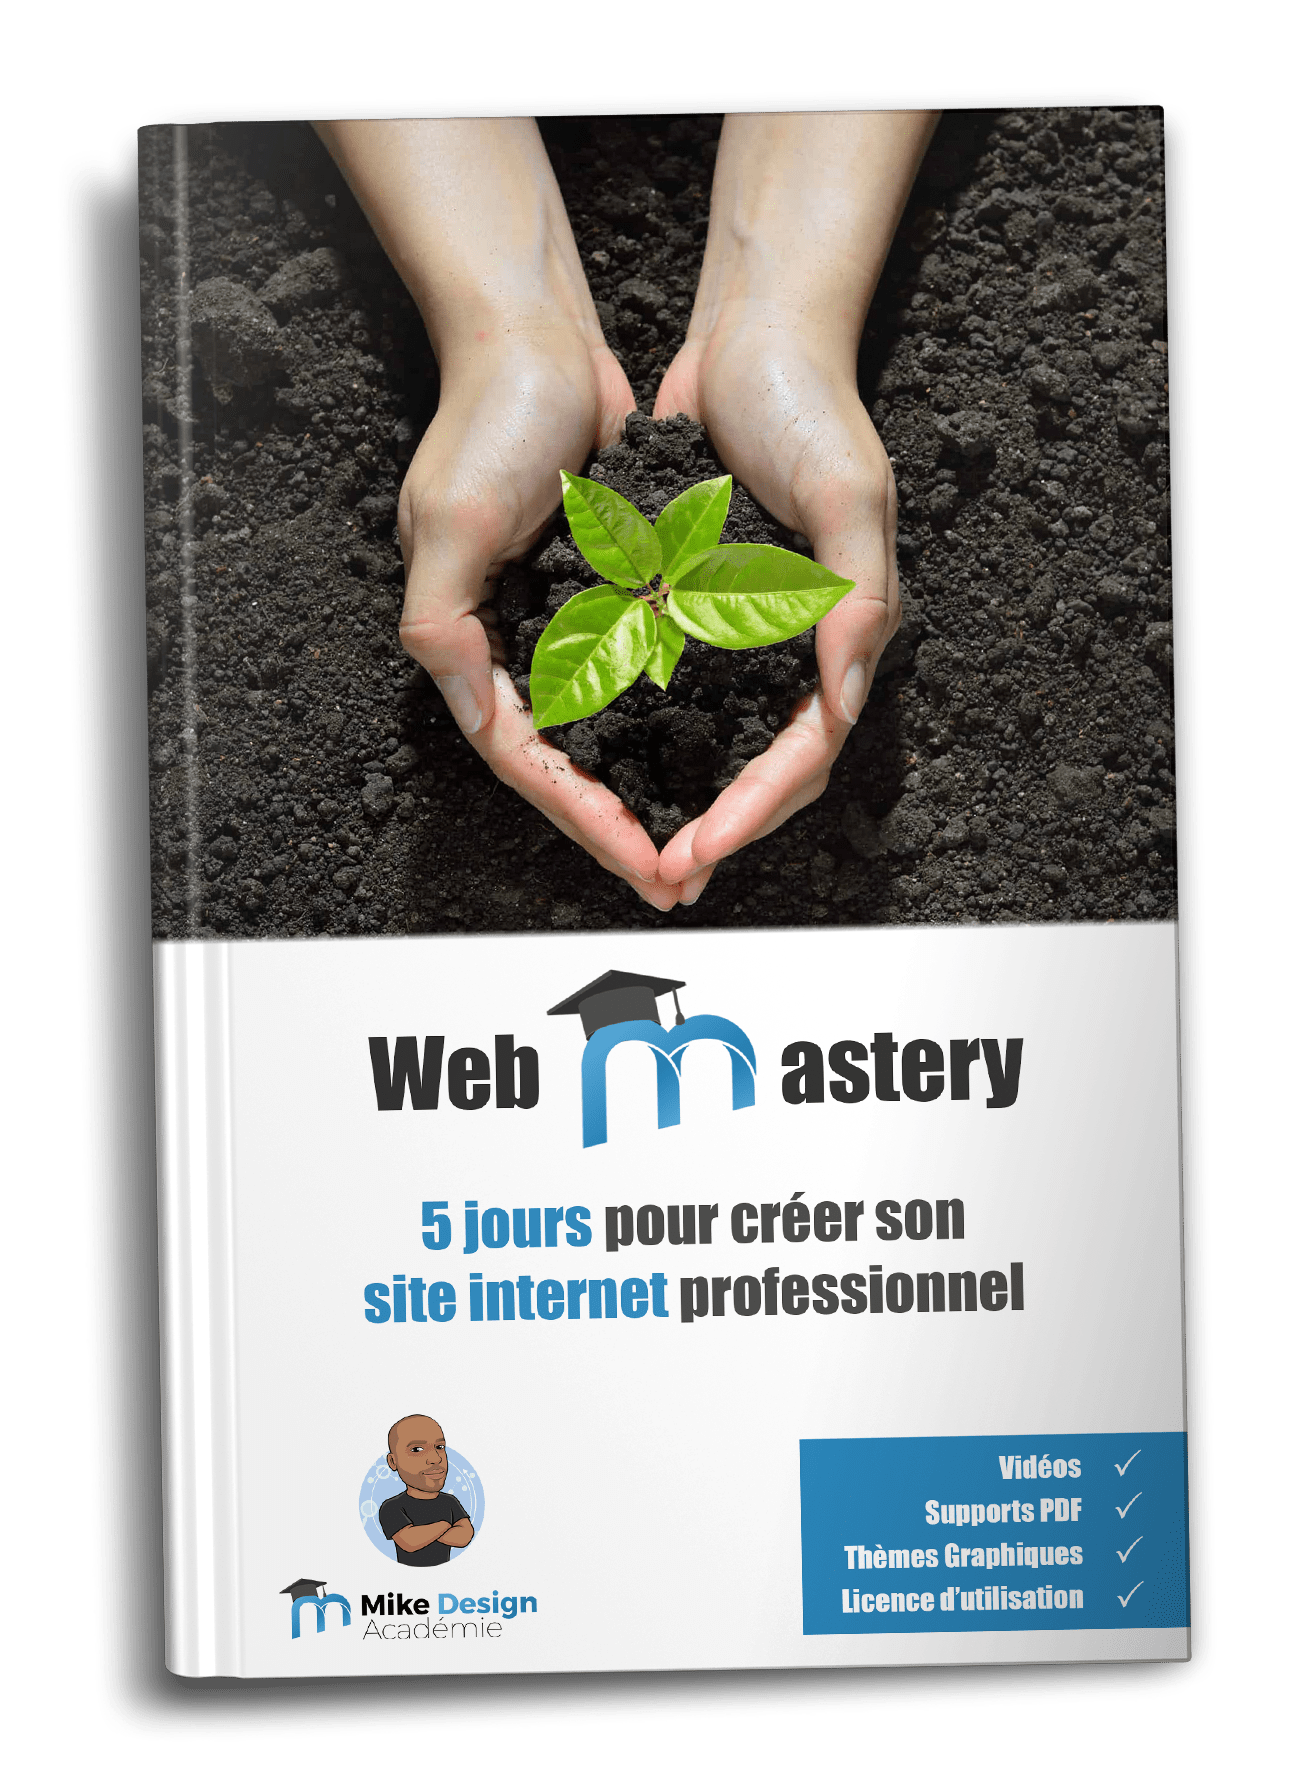 WebMastery